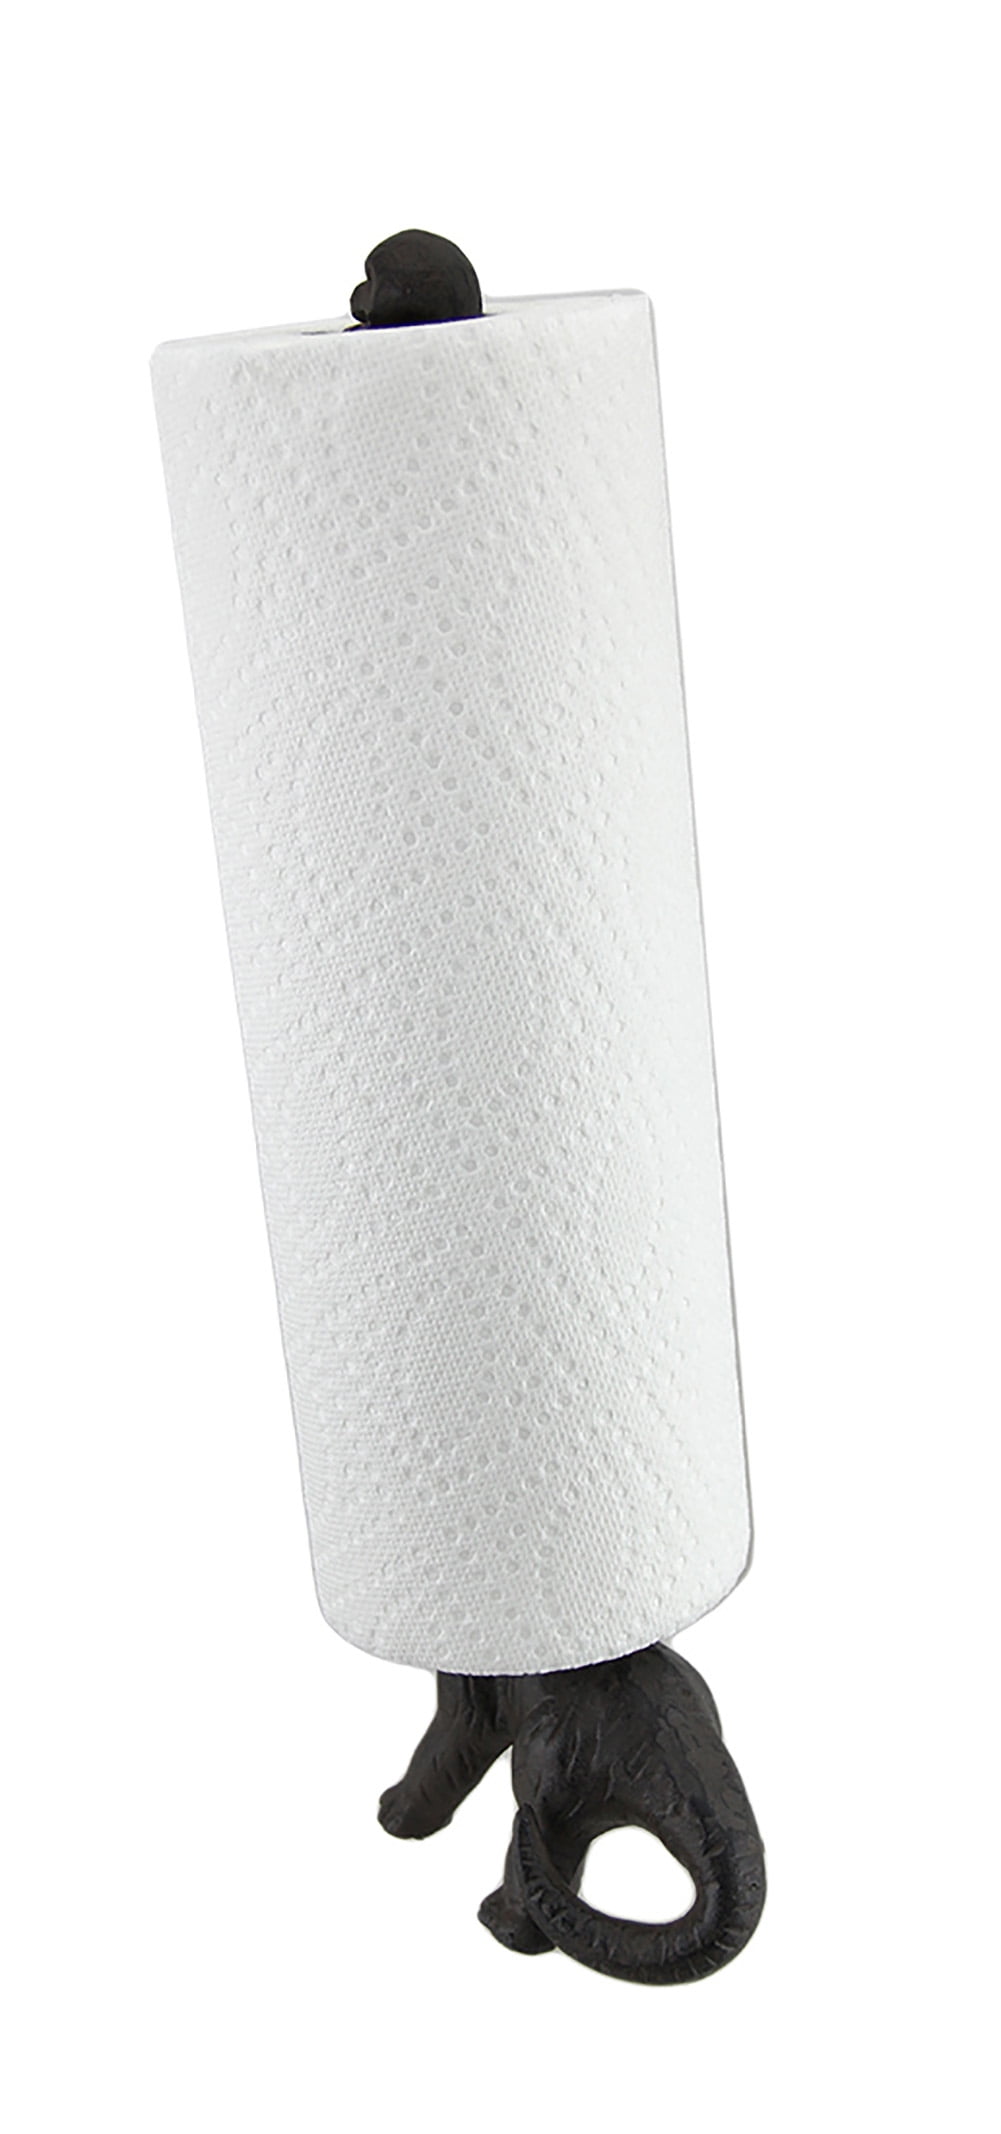 Choice Designs – Cast Iron Leg Paper towel Holder